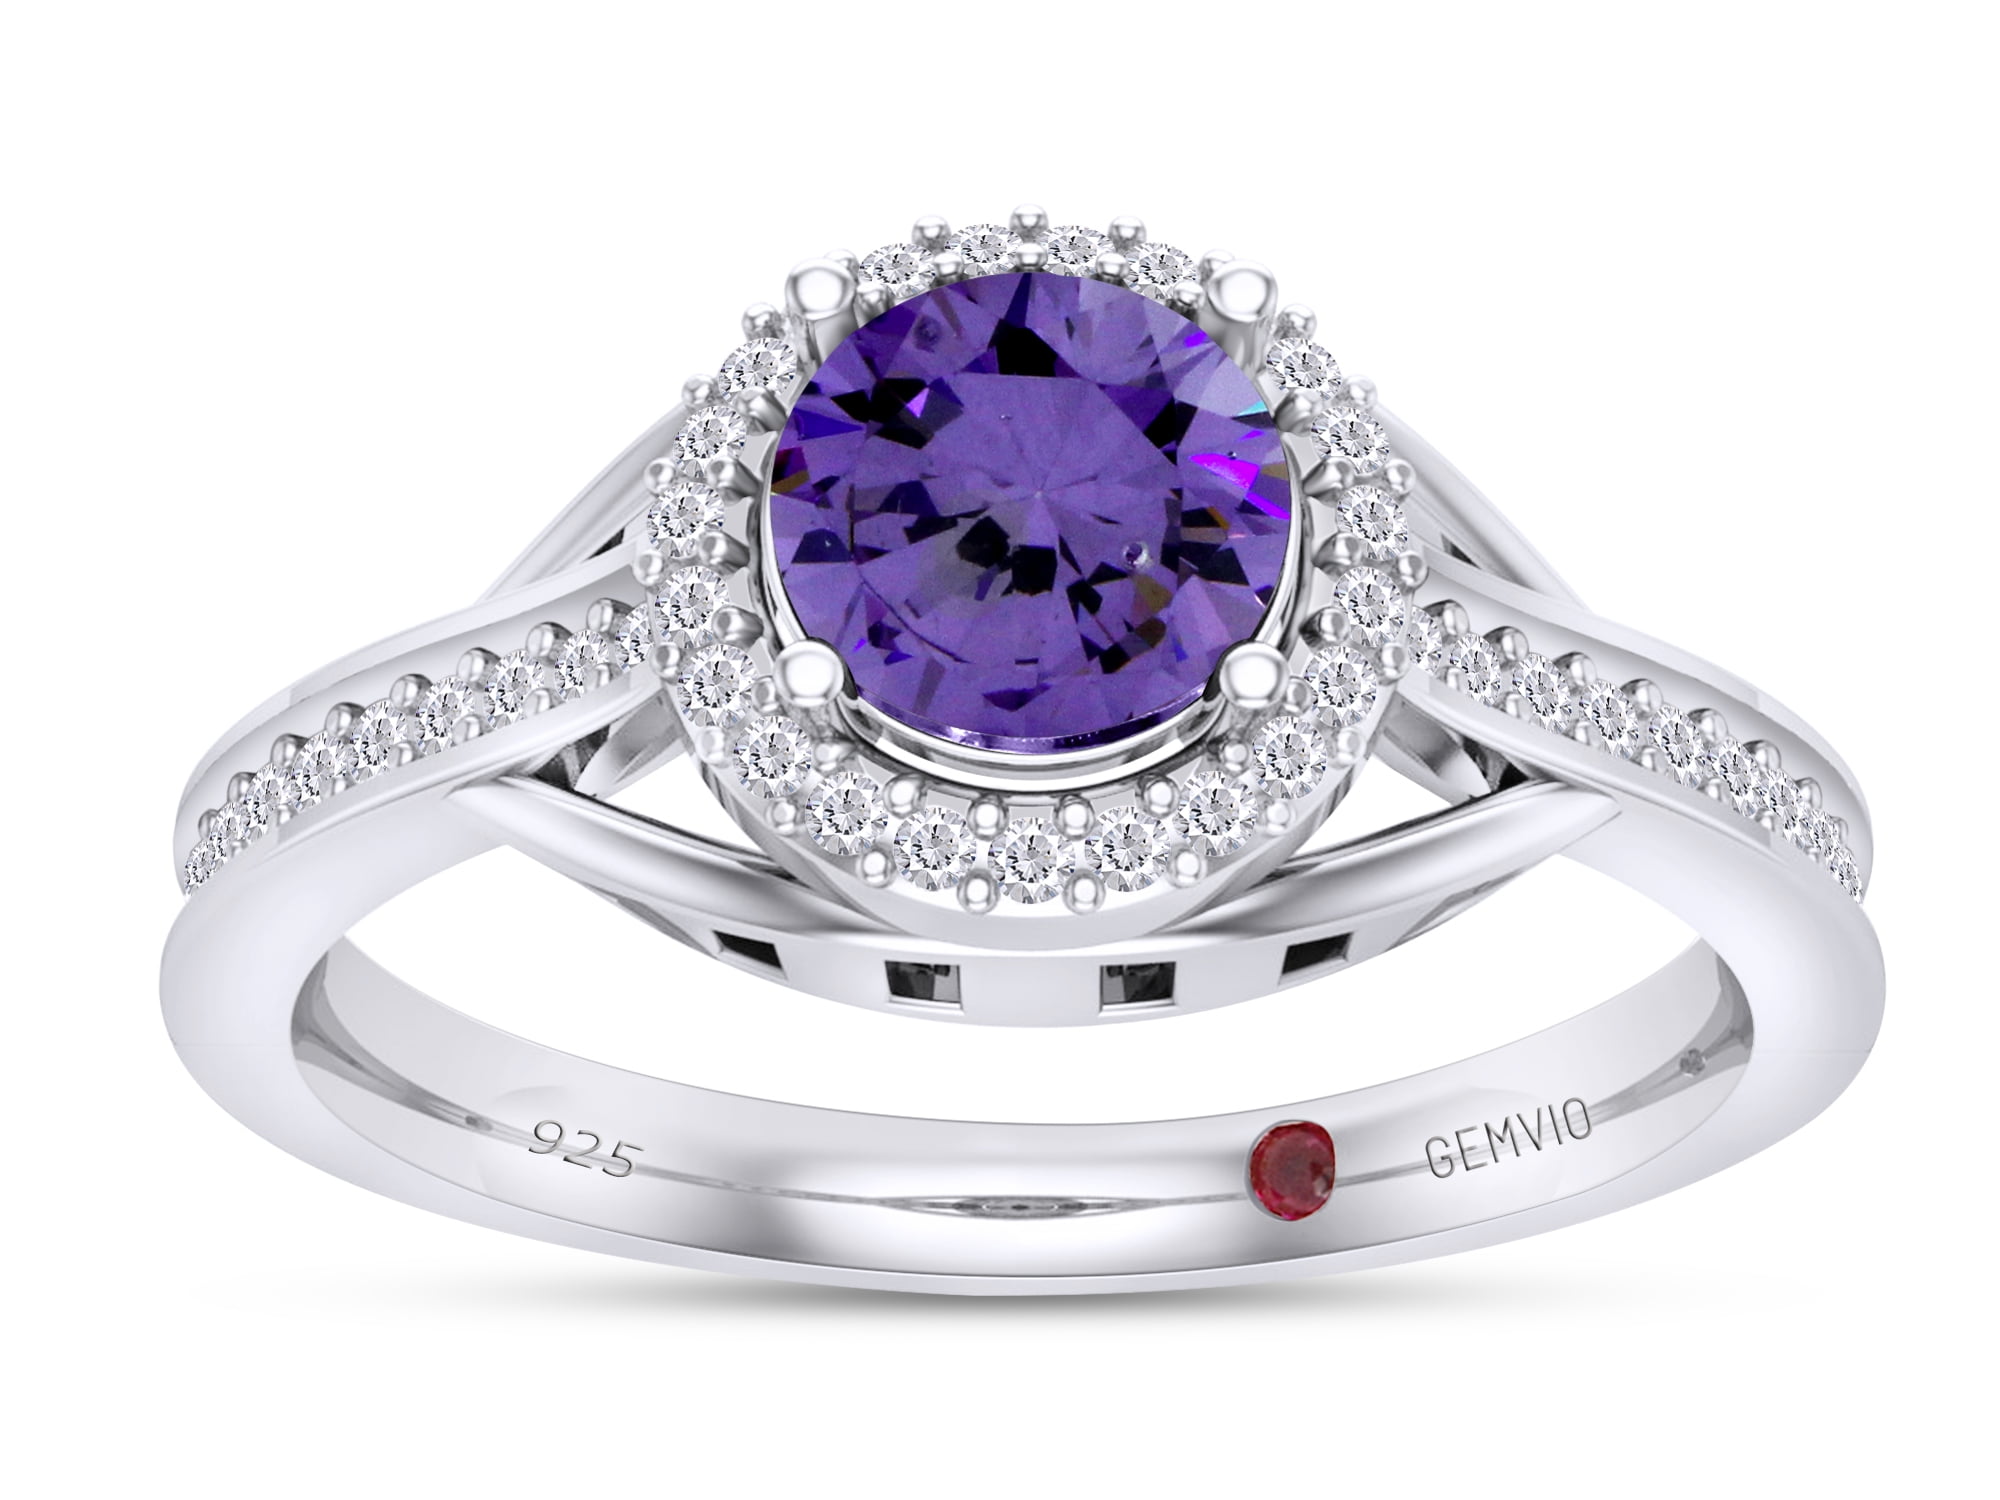 Details about   Enchante Disney Belle 1CT Diamond Engagement Wedding Trio Ring Set 925 Silver